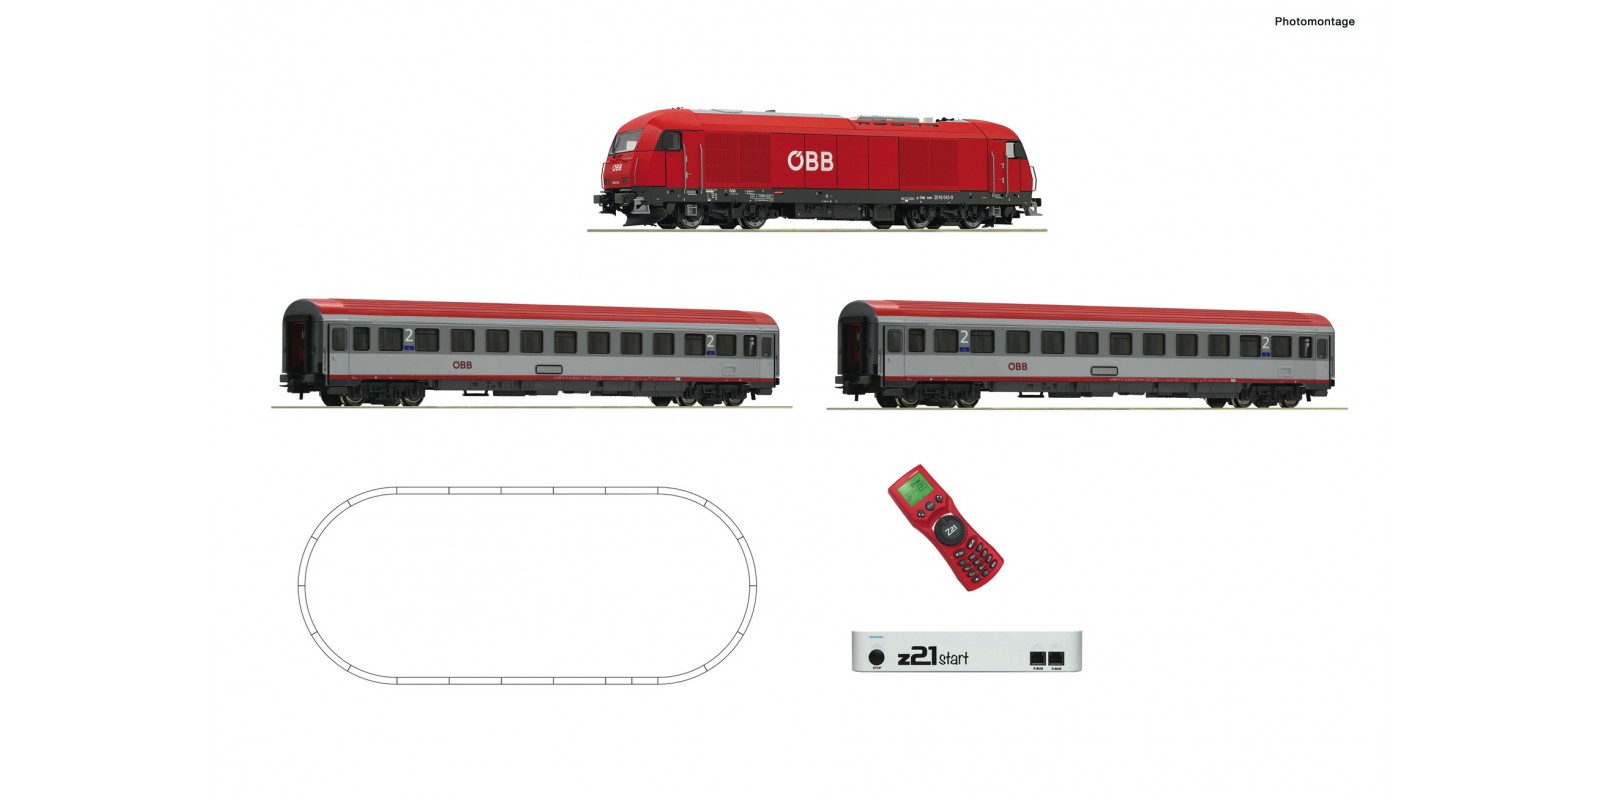 RO51341 z21 start digital set: Diesel locomotive class 2016 with express train, ÖBB